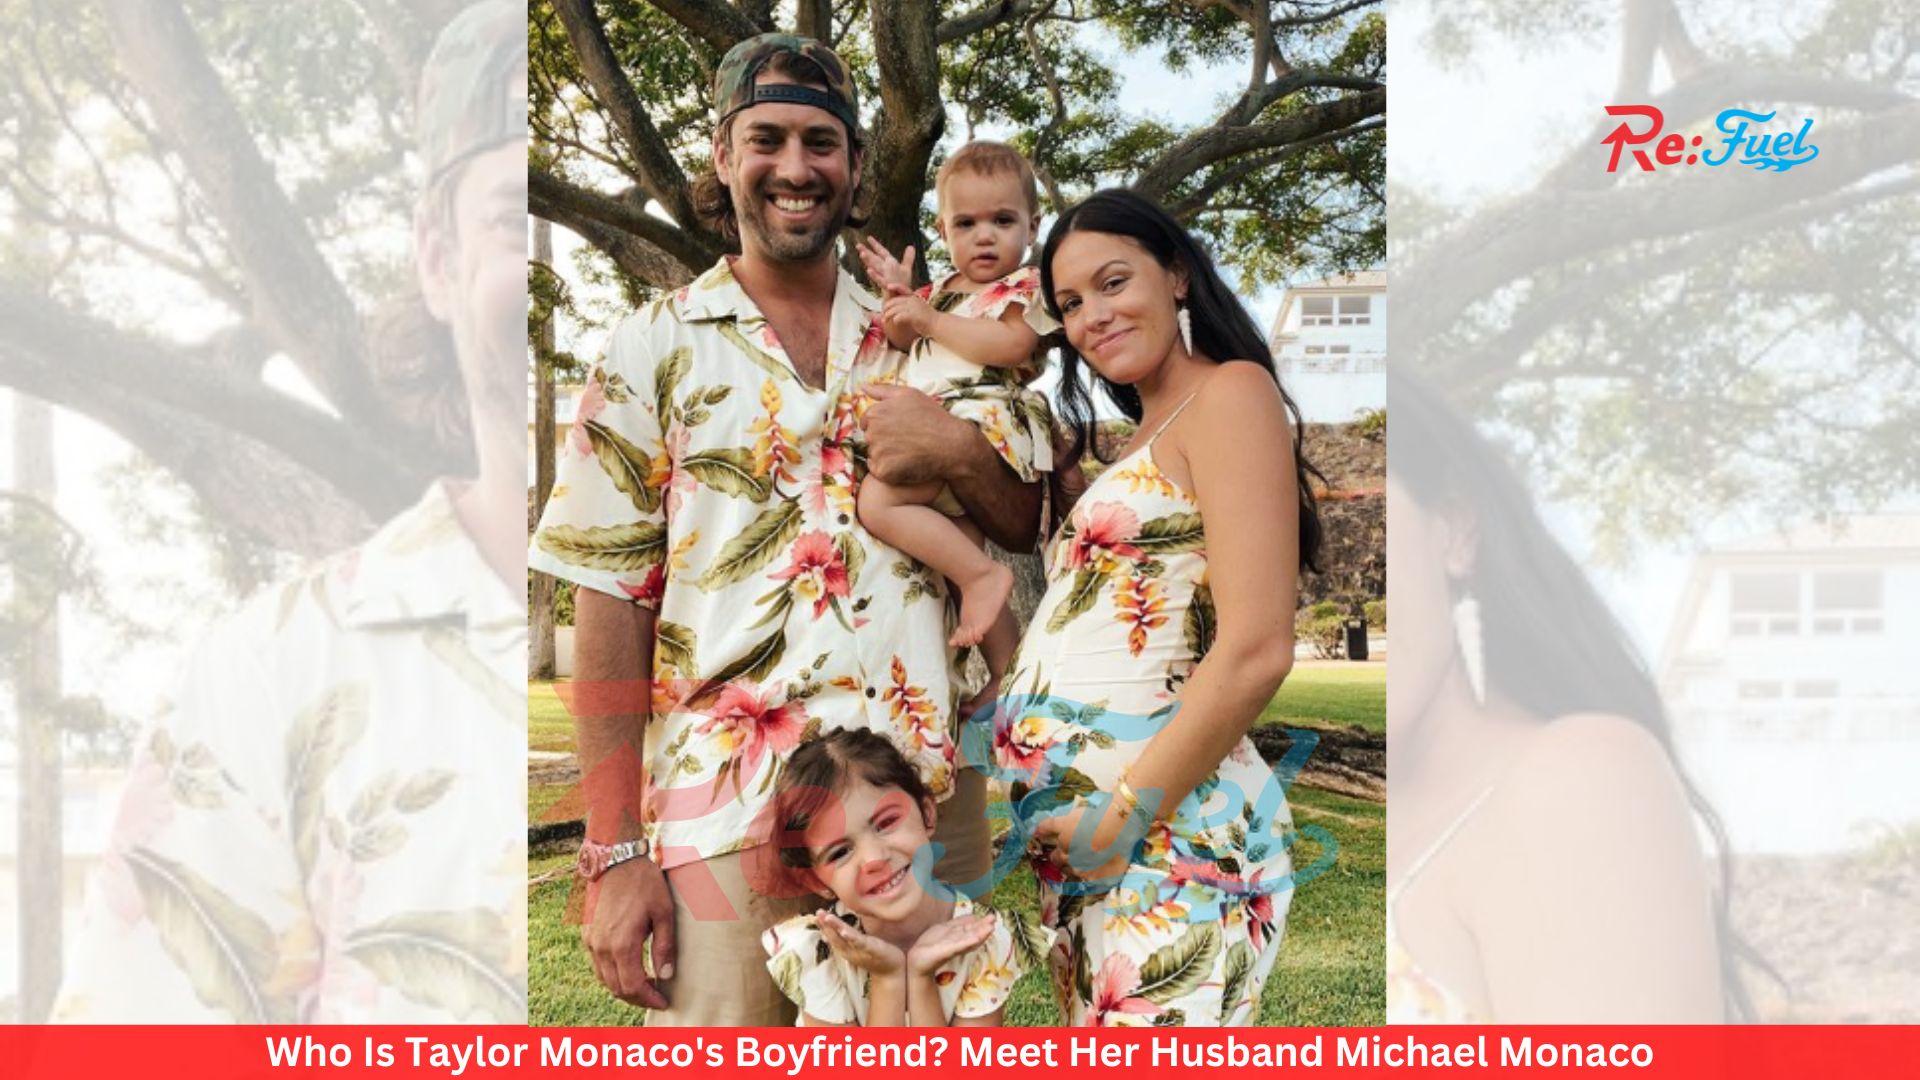 Who Is Taylor Monaco's Boyfriend? Meet Her Husband Michael Monaco